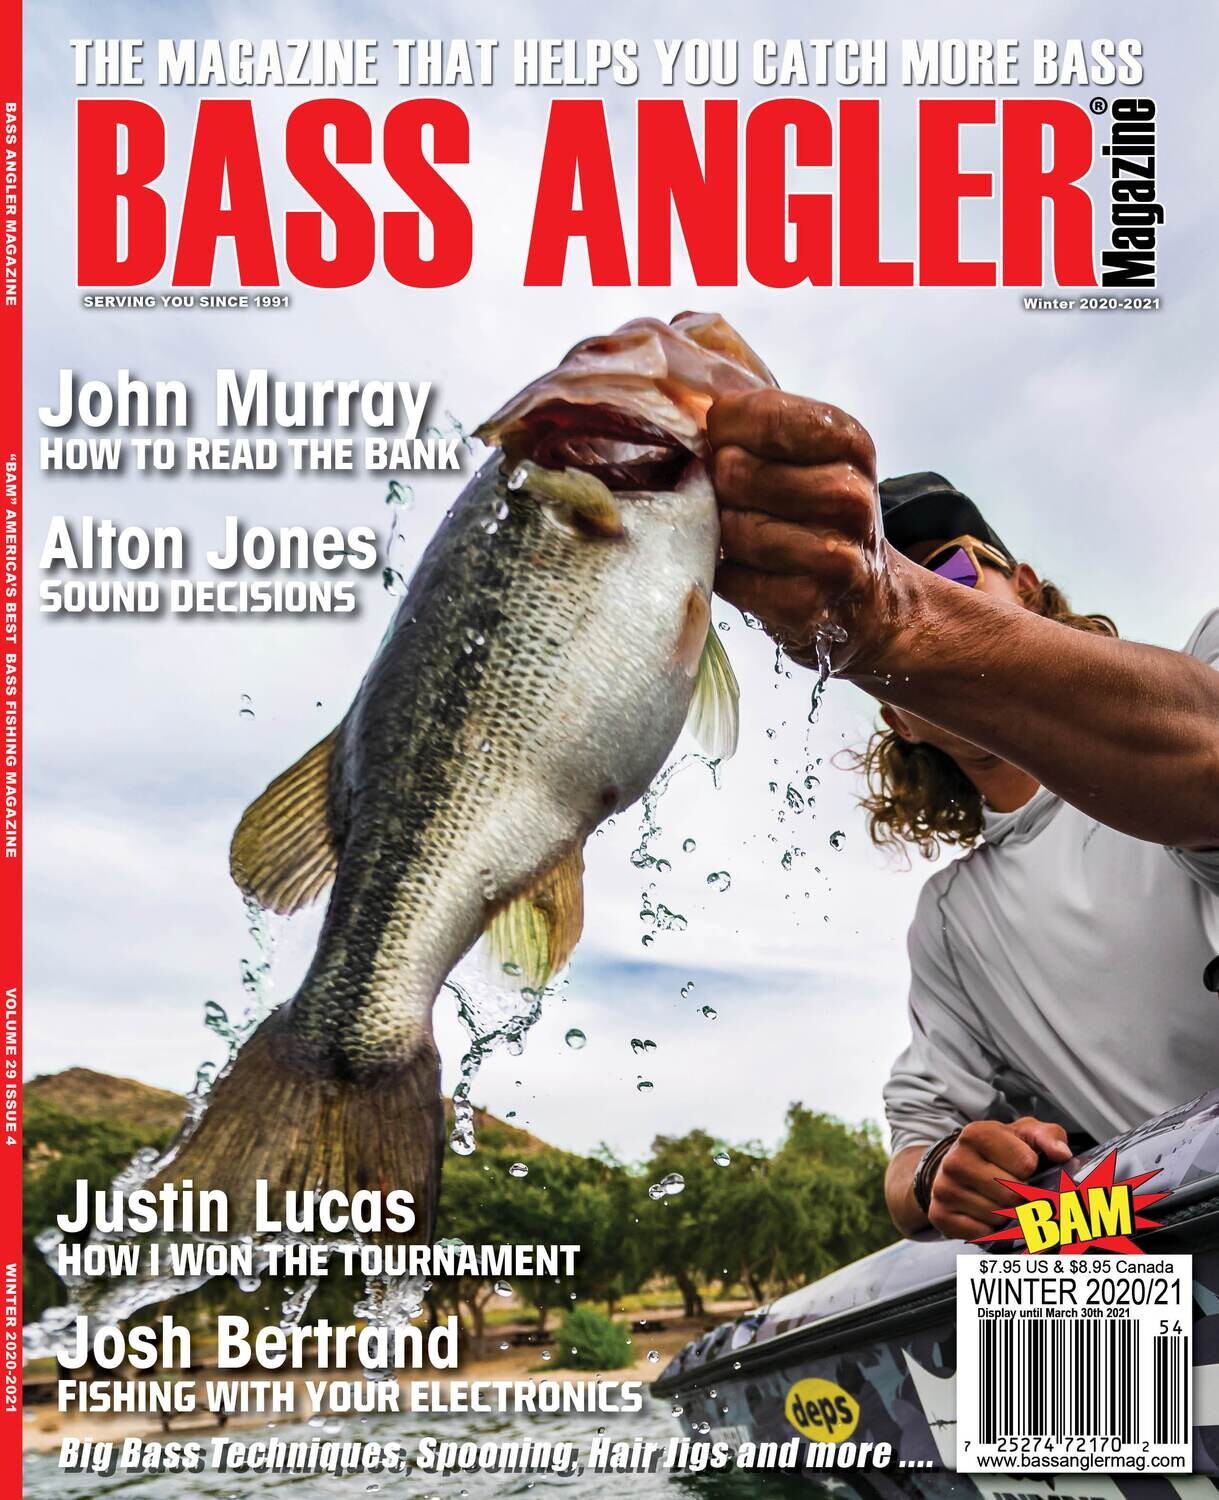 2020/2021 Winter Issue - BASS ANGLER Magazine